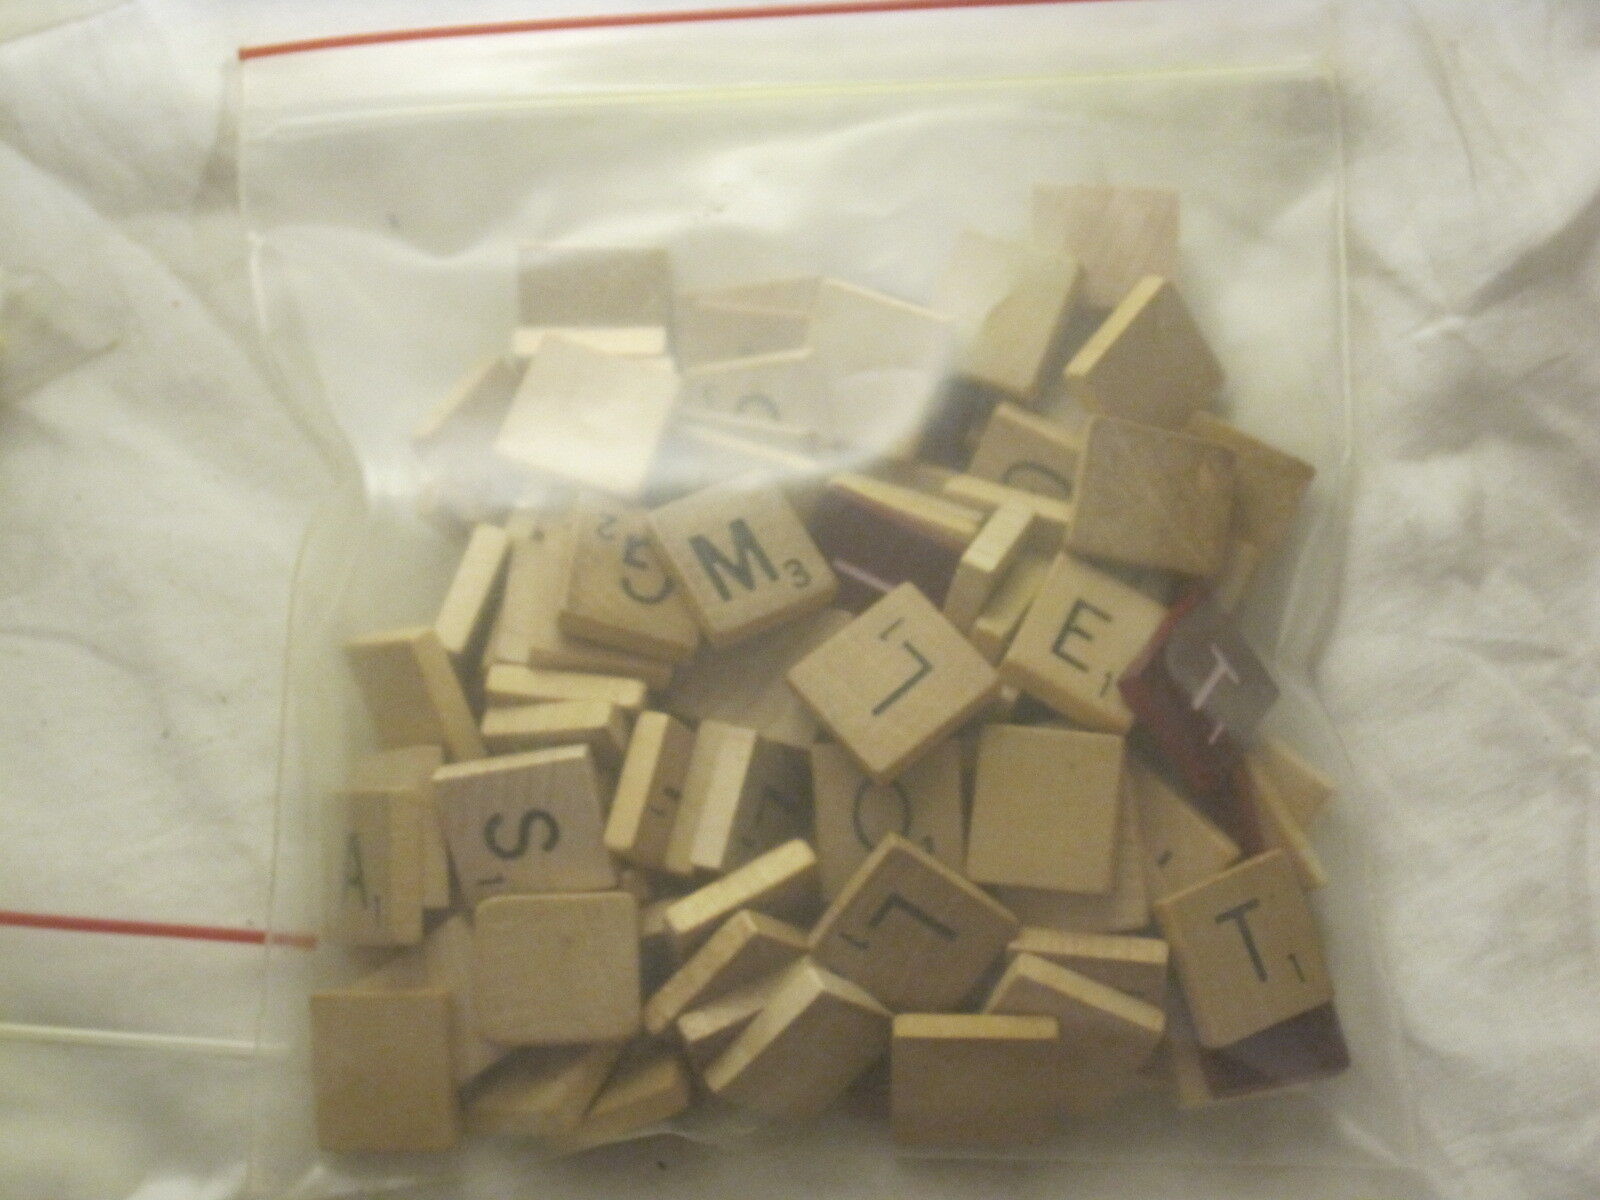 100 scrabble tiles lot mix wood wooden tile mixed bag vintage + game letters 